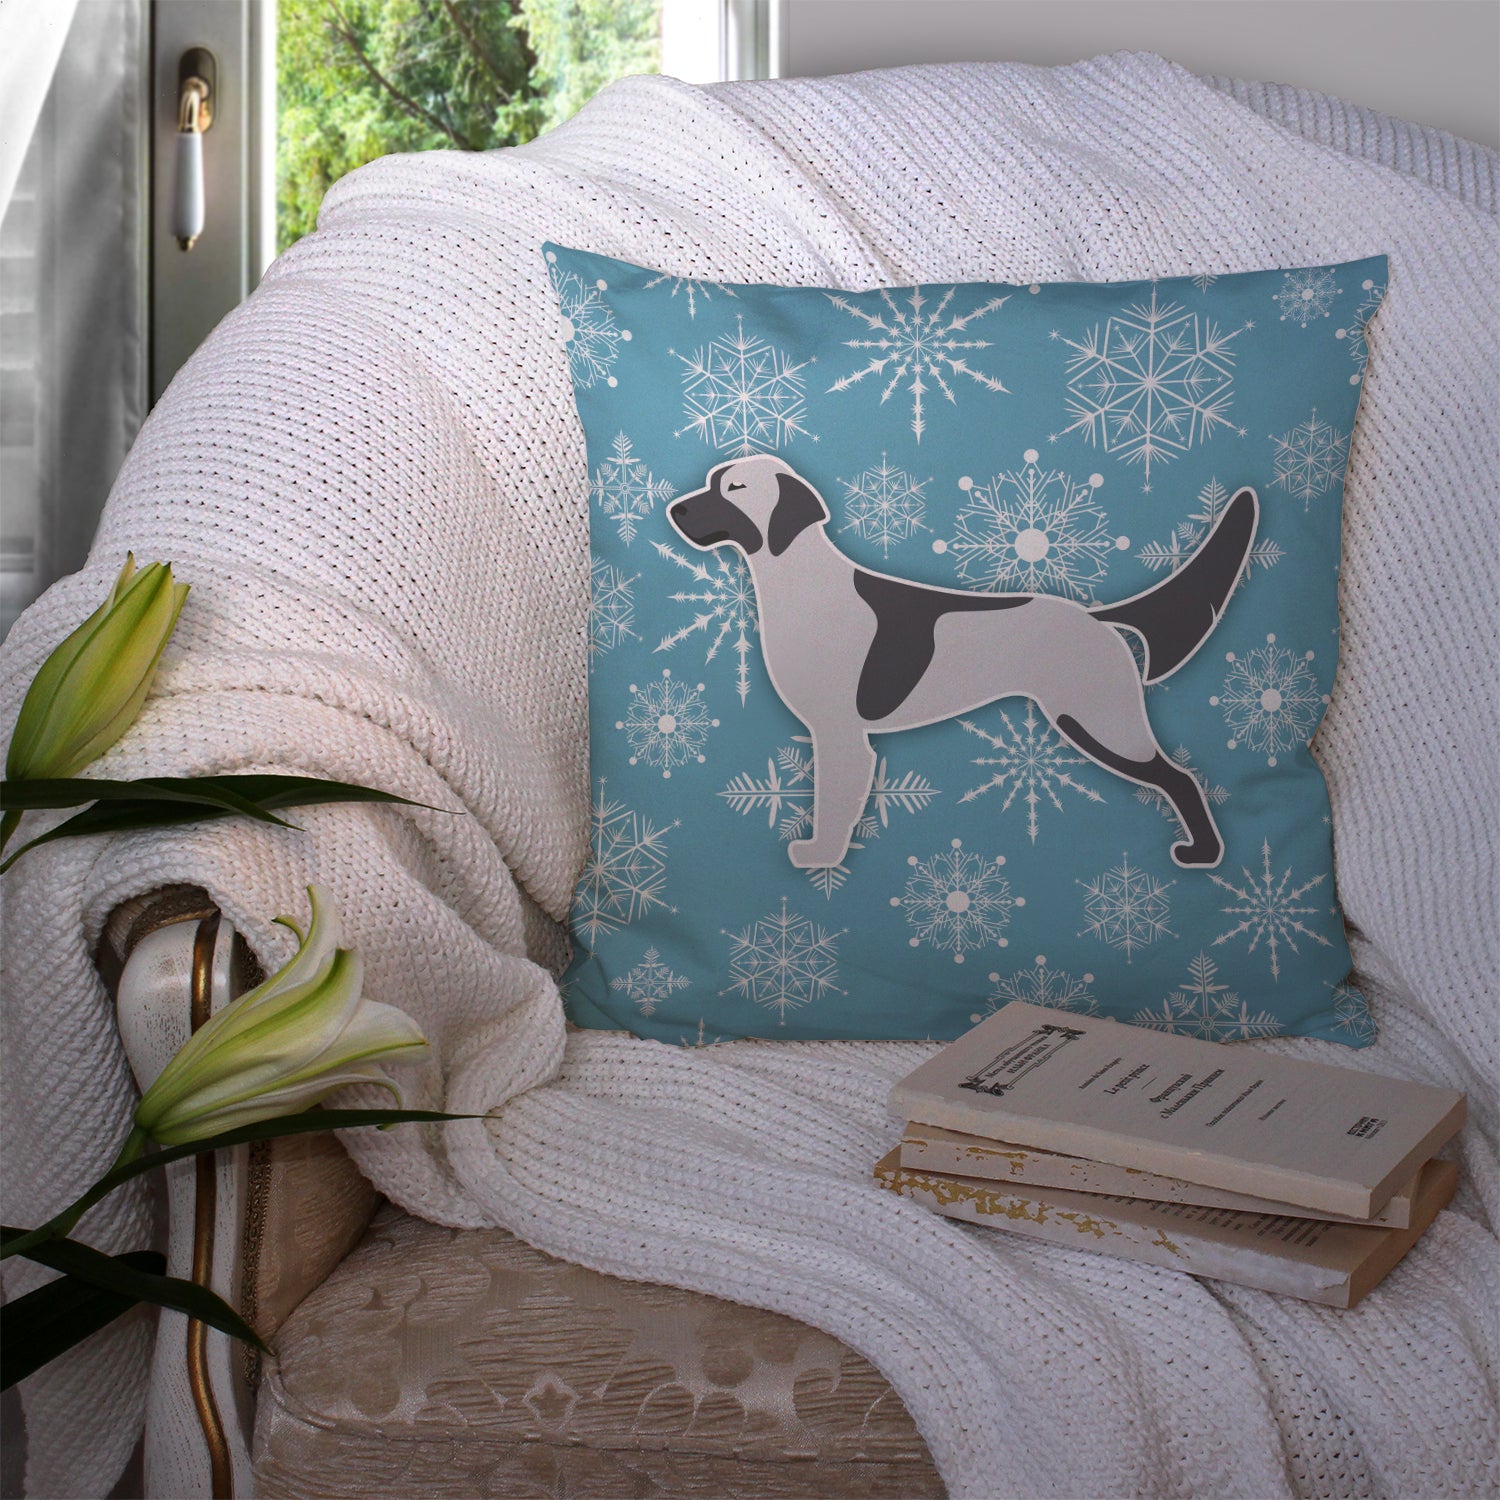 Winter Snowflake English Setter Fabric Decorative Pillow BB3481PW1414 - the-store.com